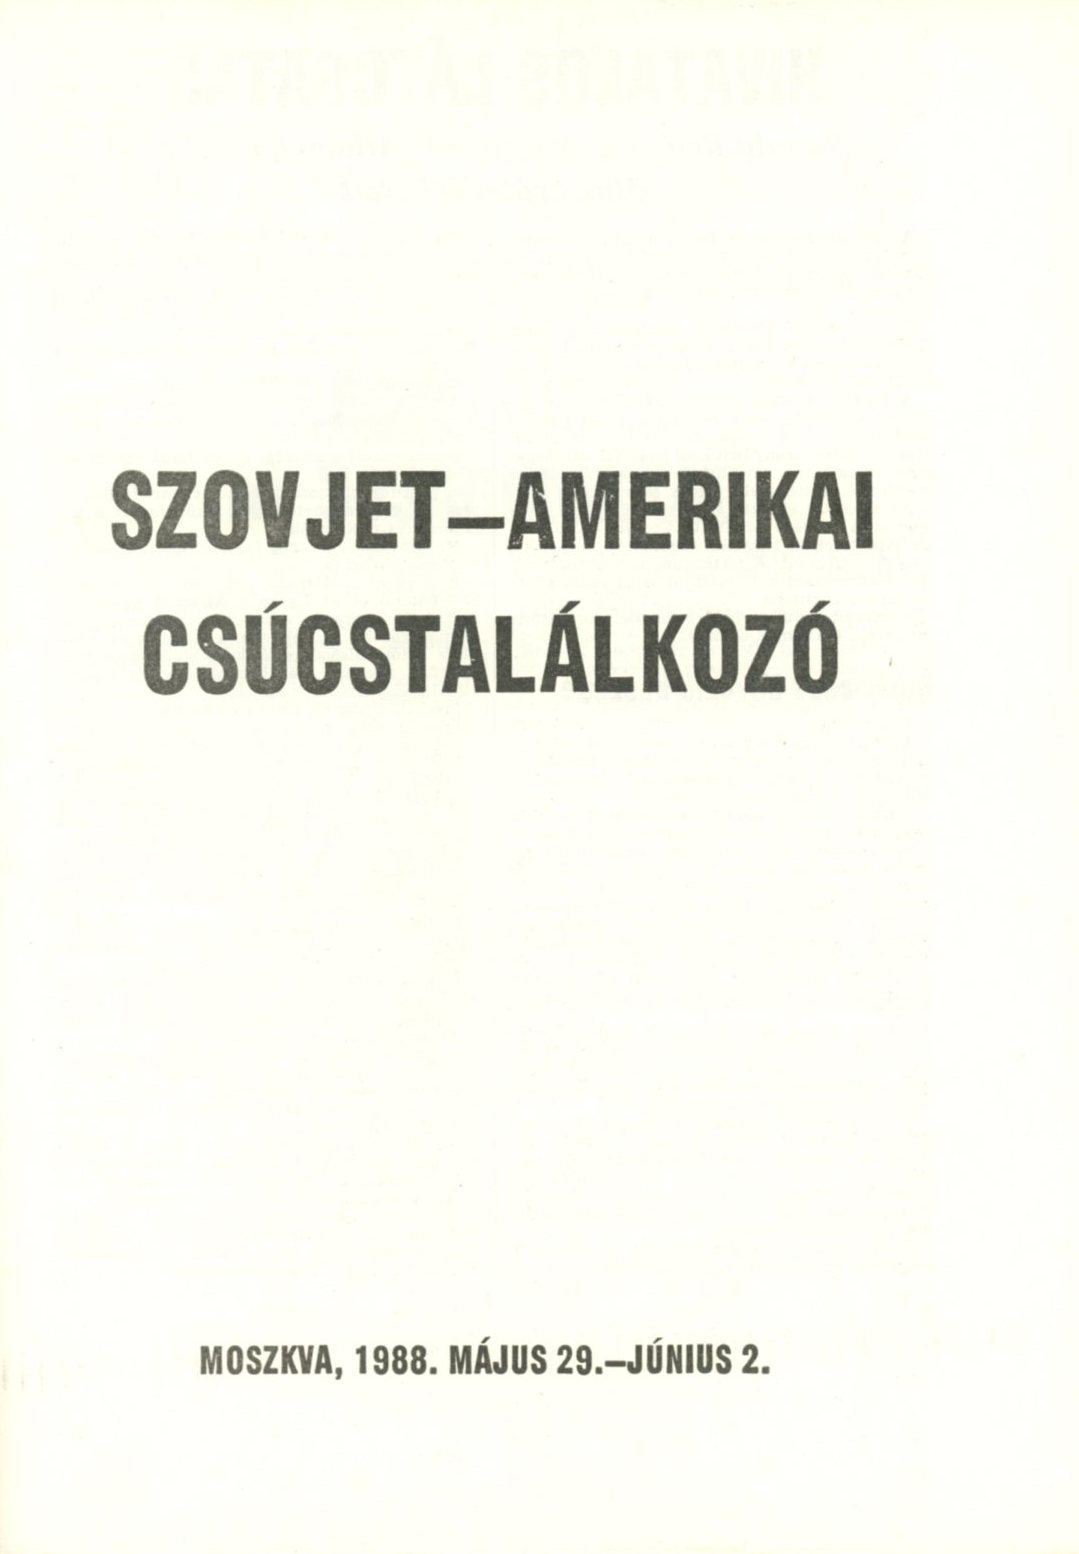 Propagandafüzet (Erkel Ferenc Múzeum CC BY-NC-SA)